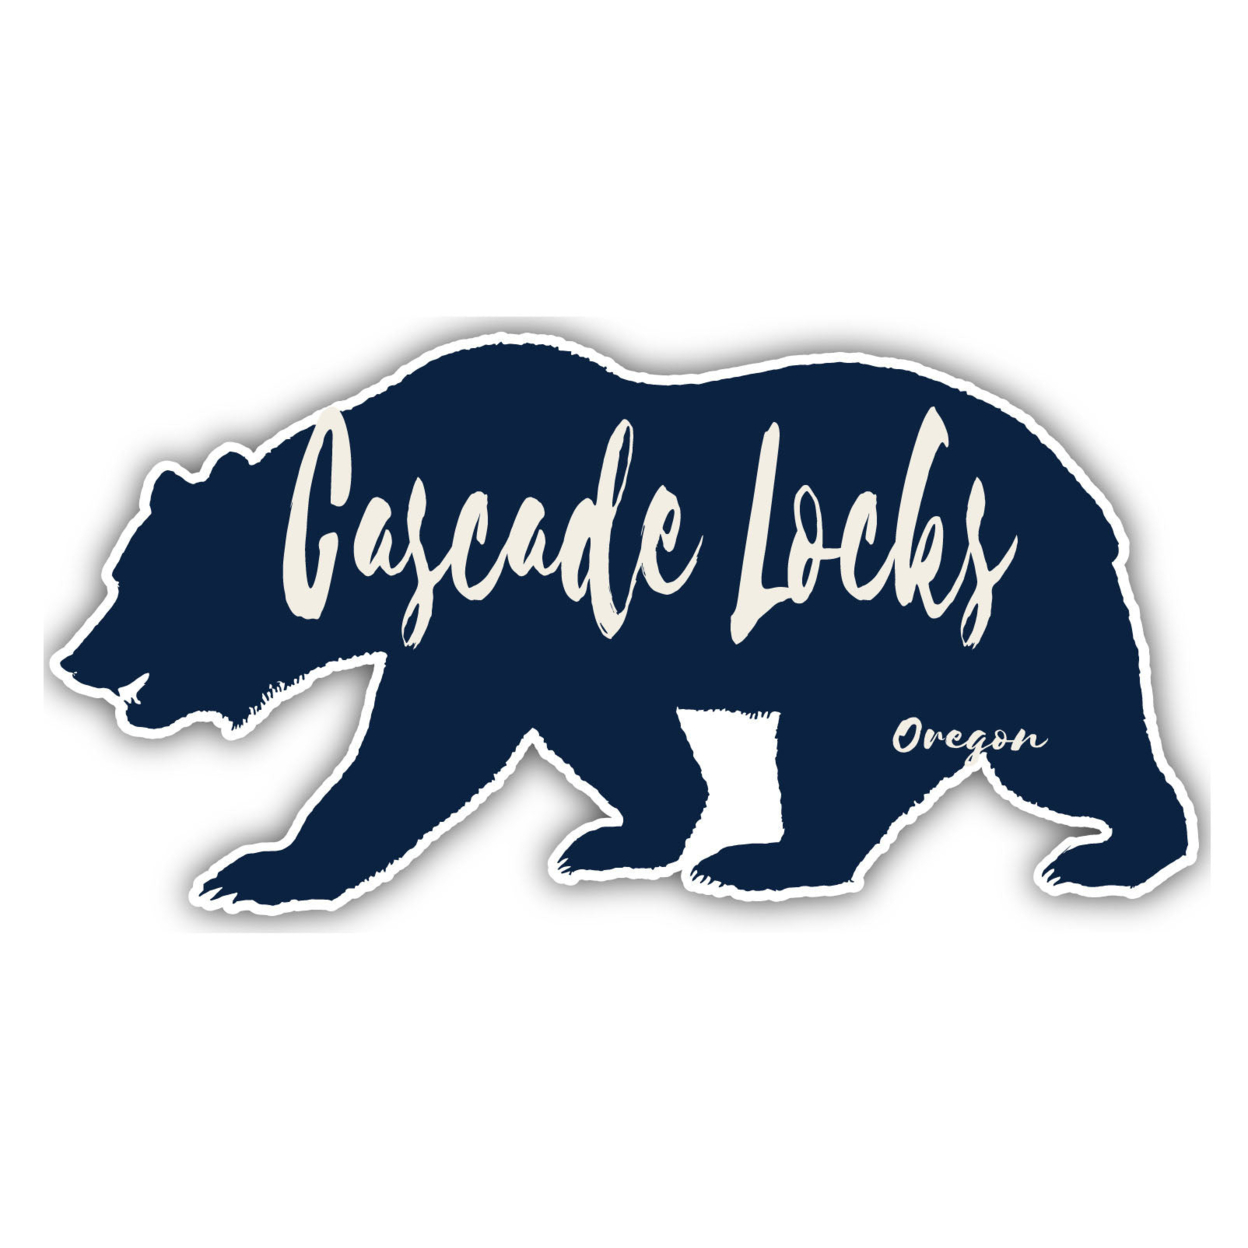 Cascade Locks Oregon Souvenir Decorative Stickers (Choose Theme And Size) - Single Unit, 2-Inch, Tent